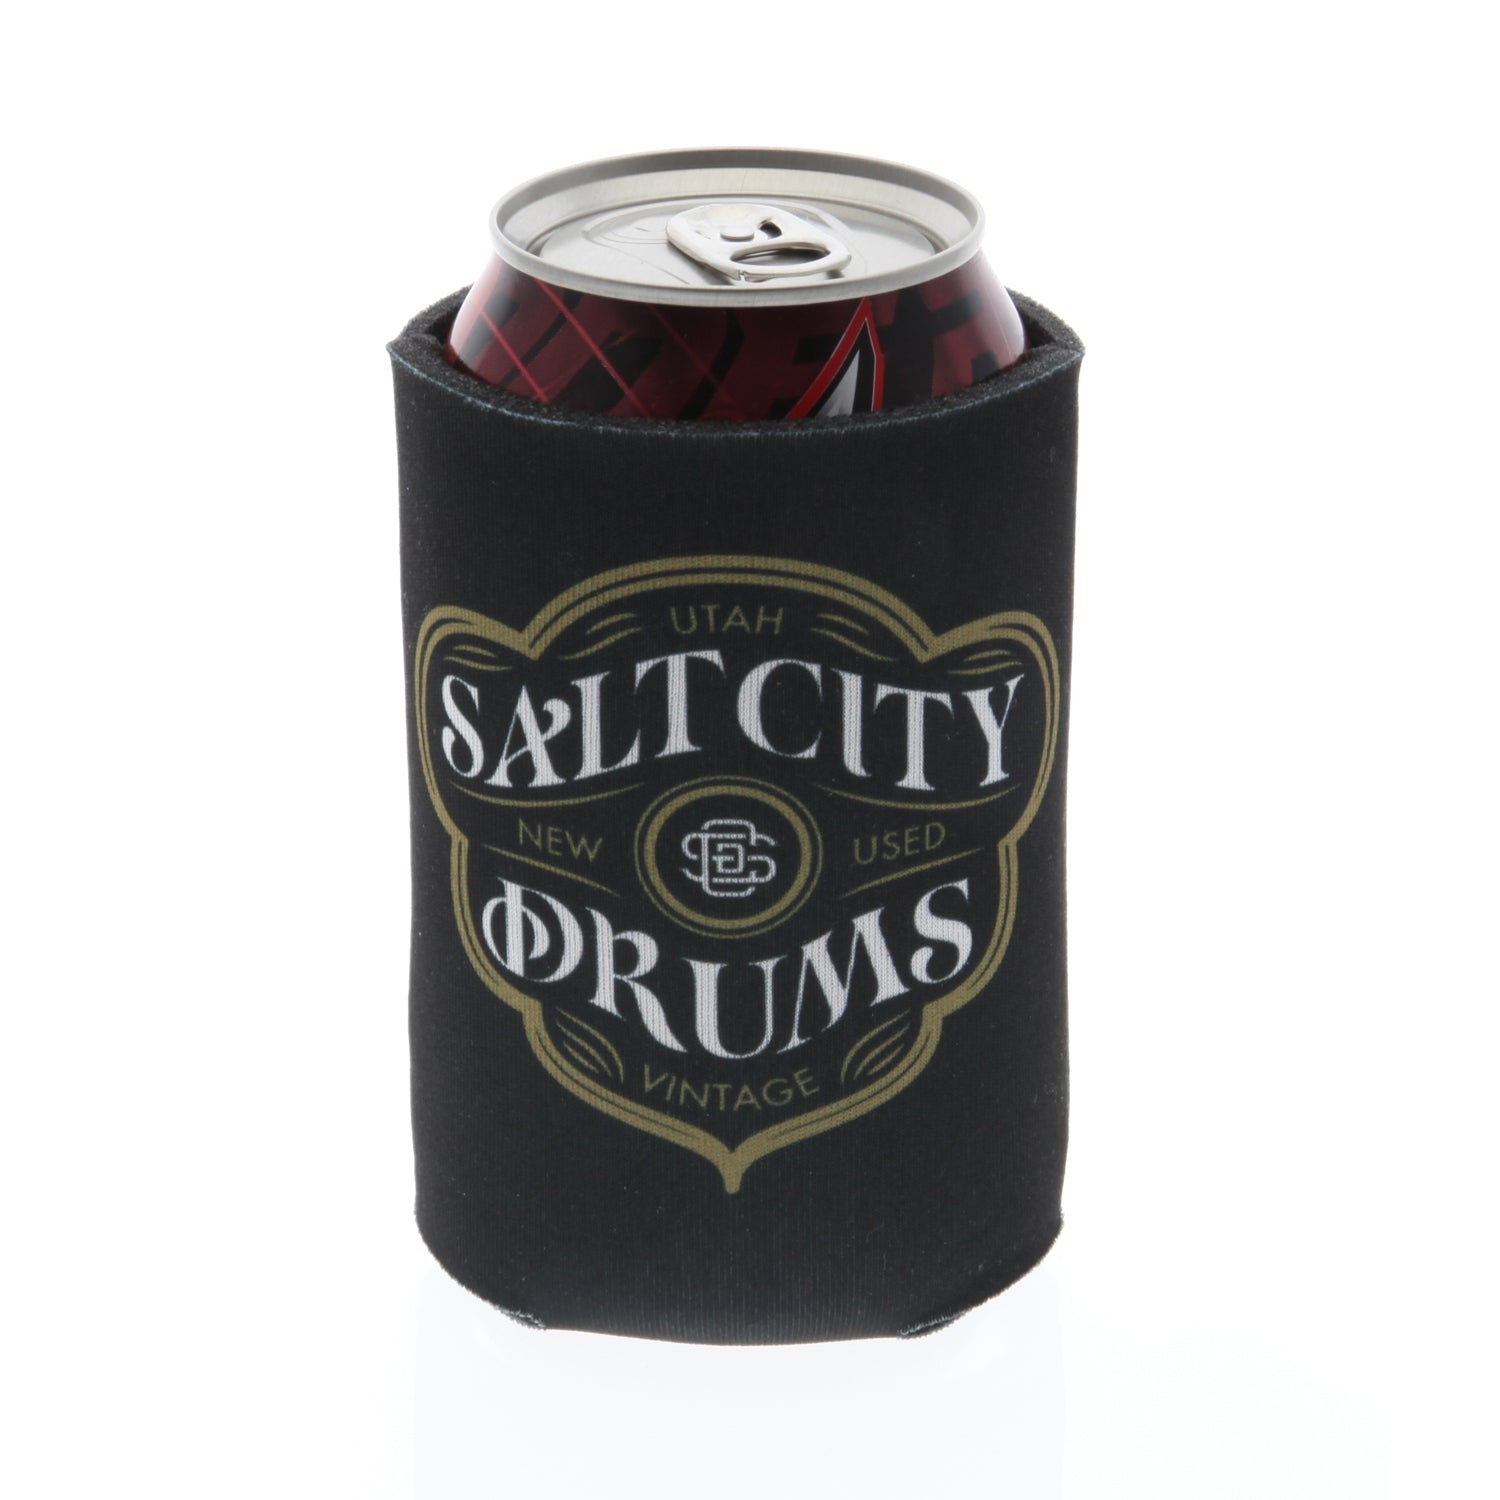 Salt City Drums Koozie